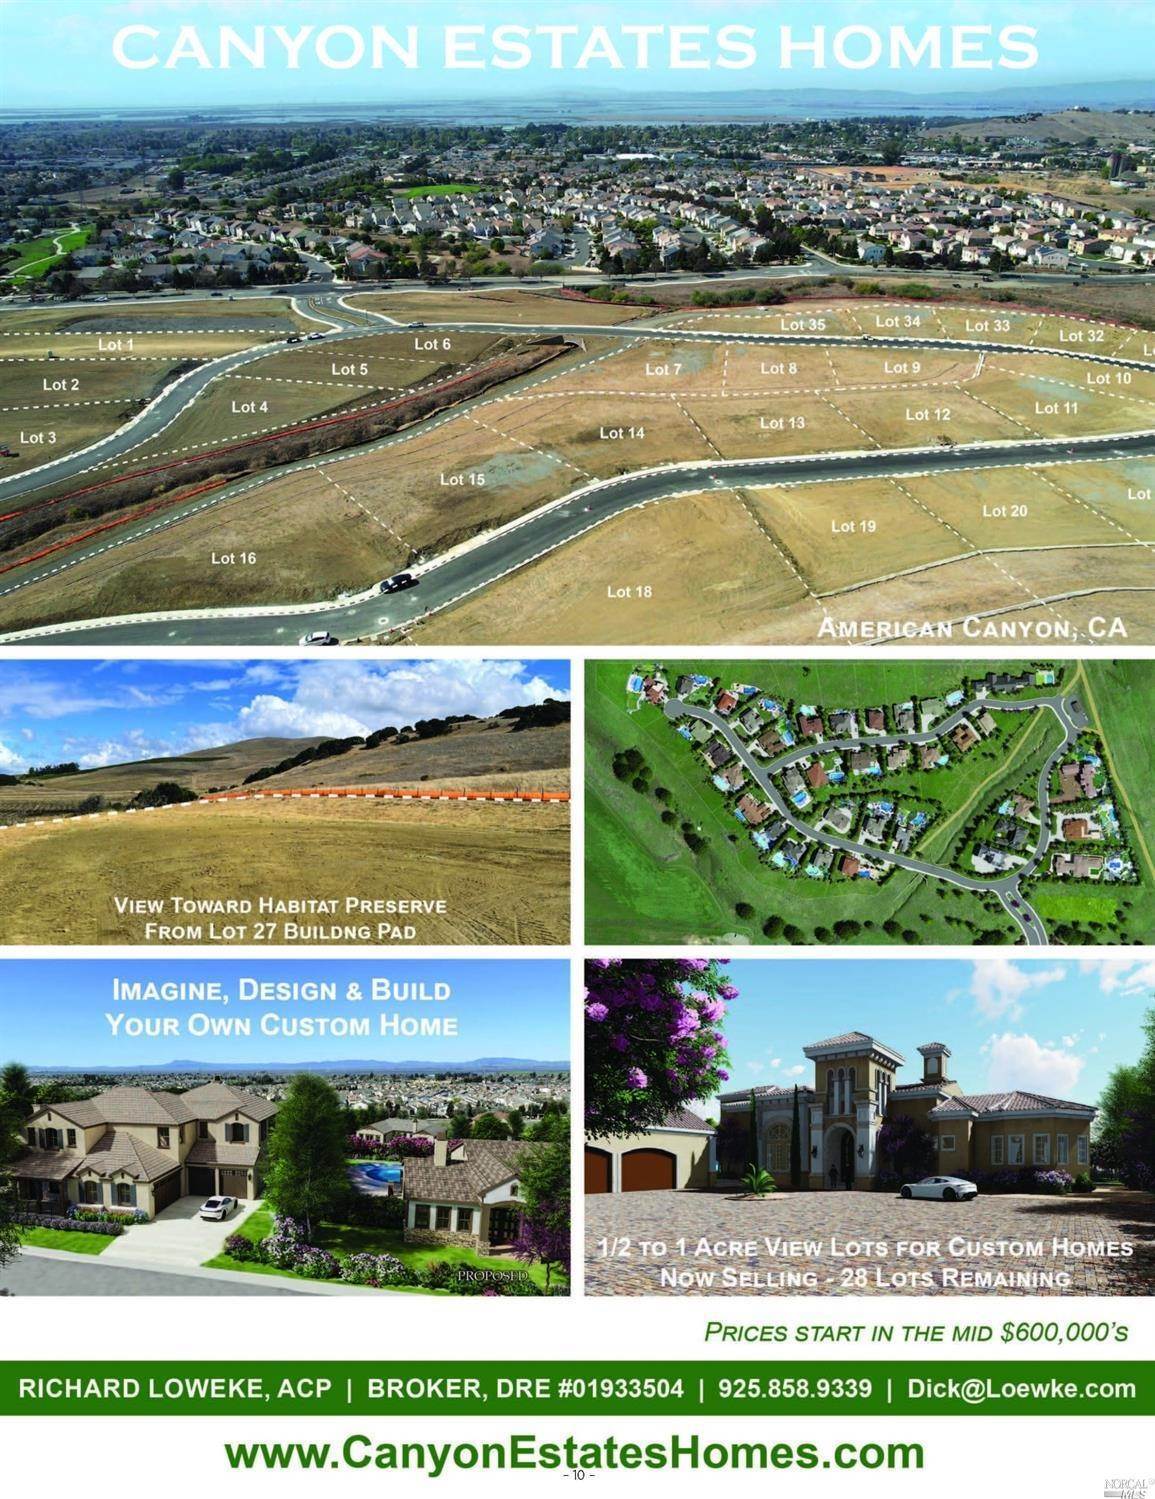 6. Land for Sale at 295 Canyon Estates Cir #Lot31 American Canyon, California 94503 United States